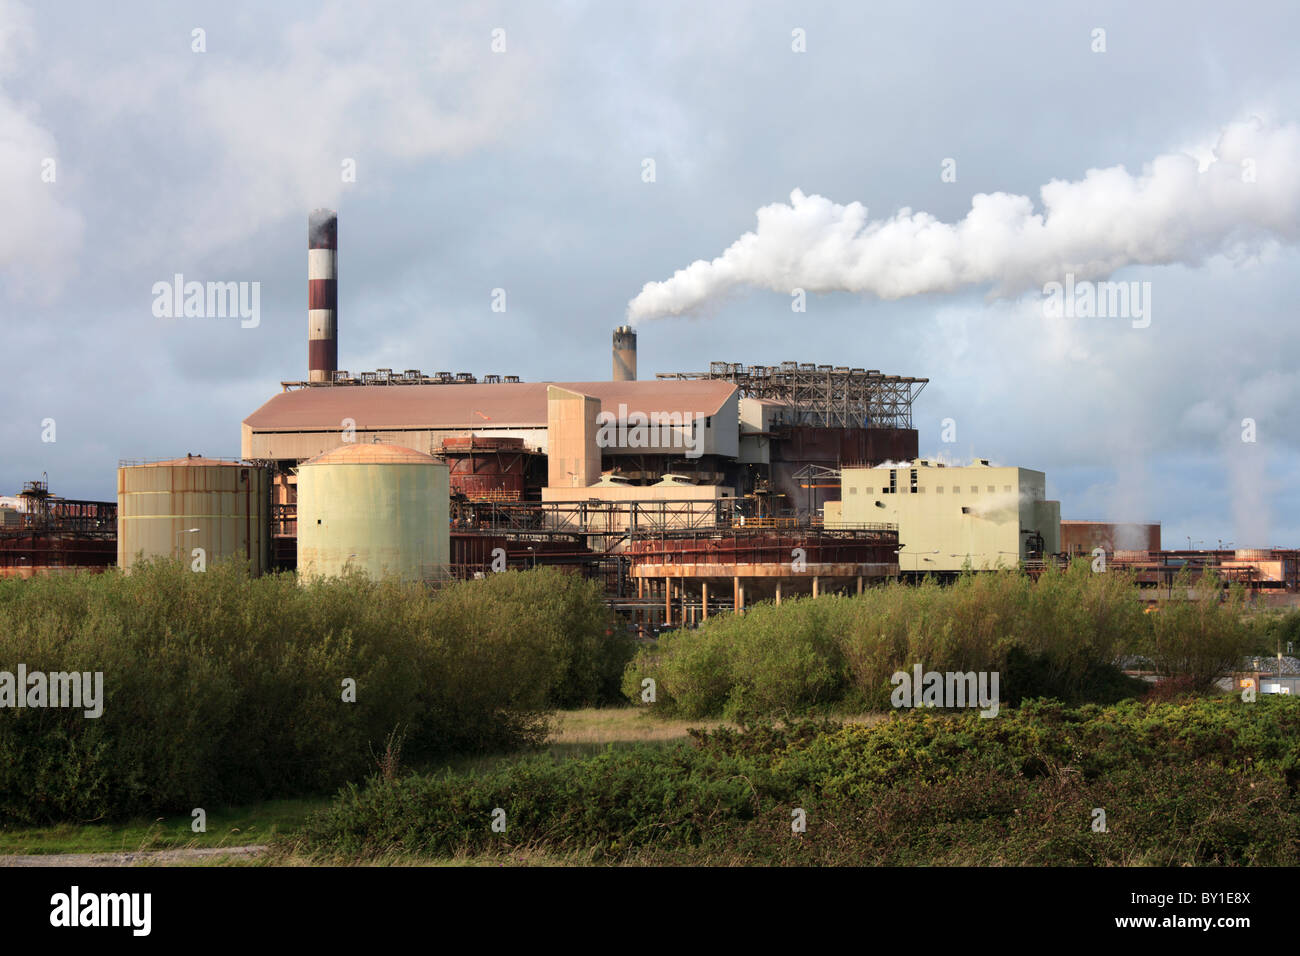 Aughinish Alumina, raffinerie d'aluminium, l'estuaire du Shannon, Irlande Banque D'Images